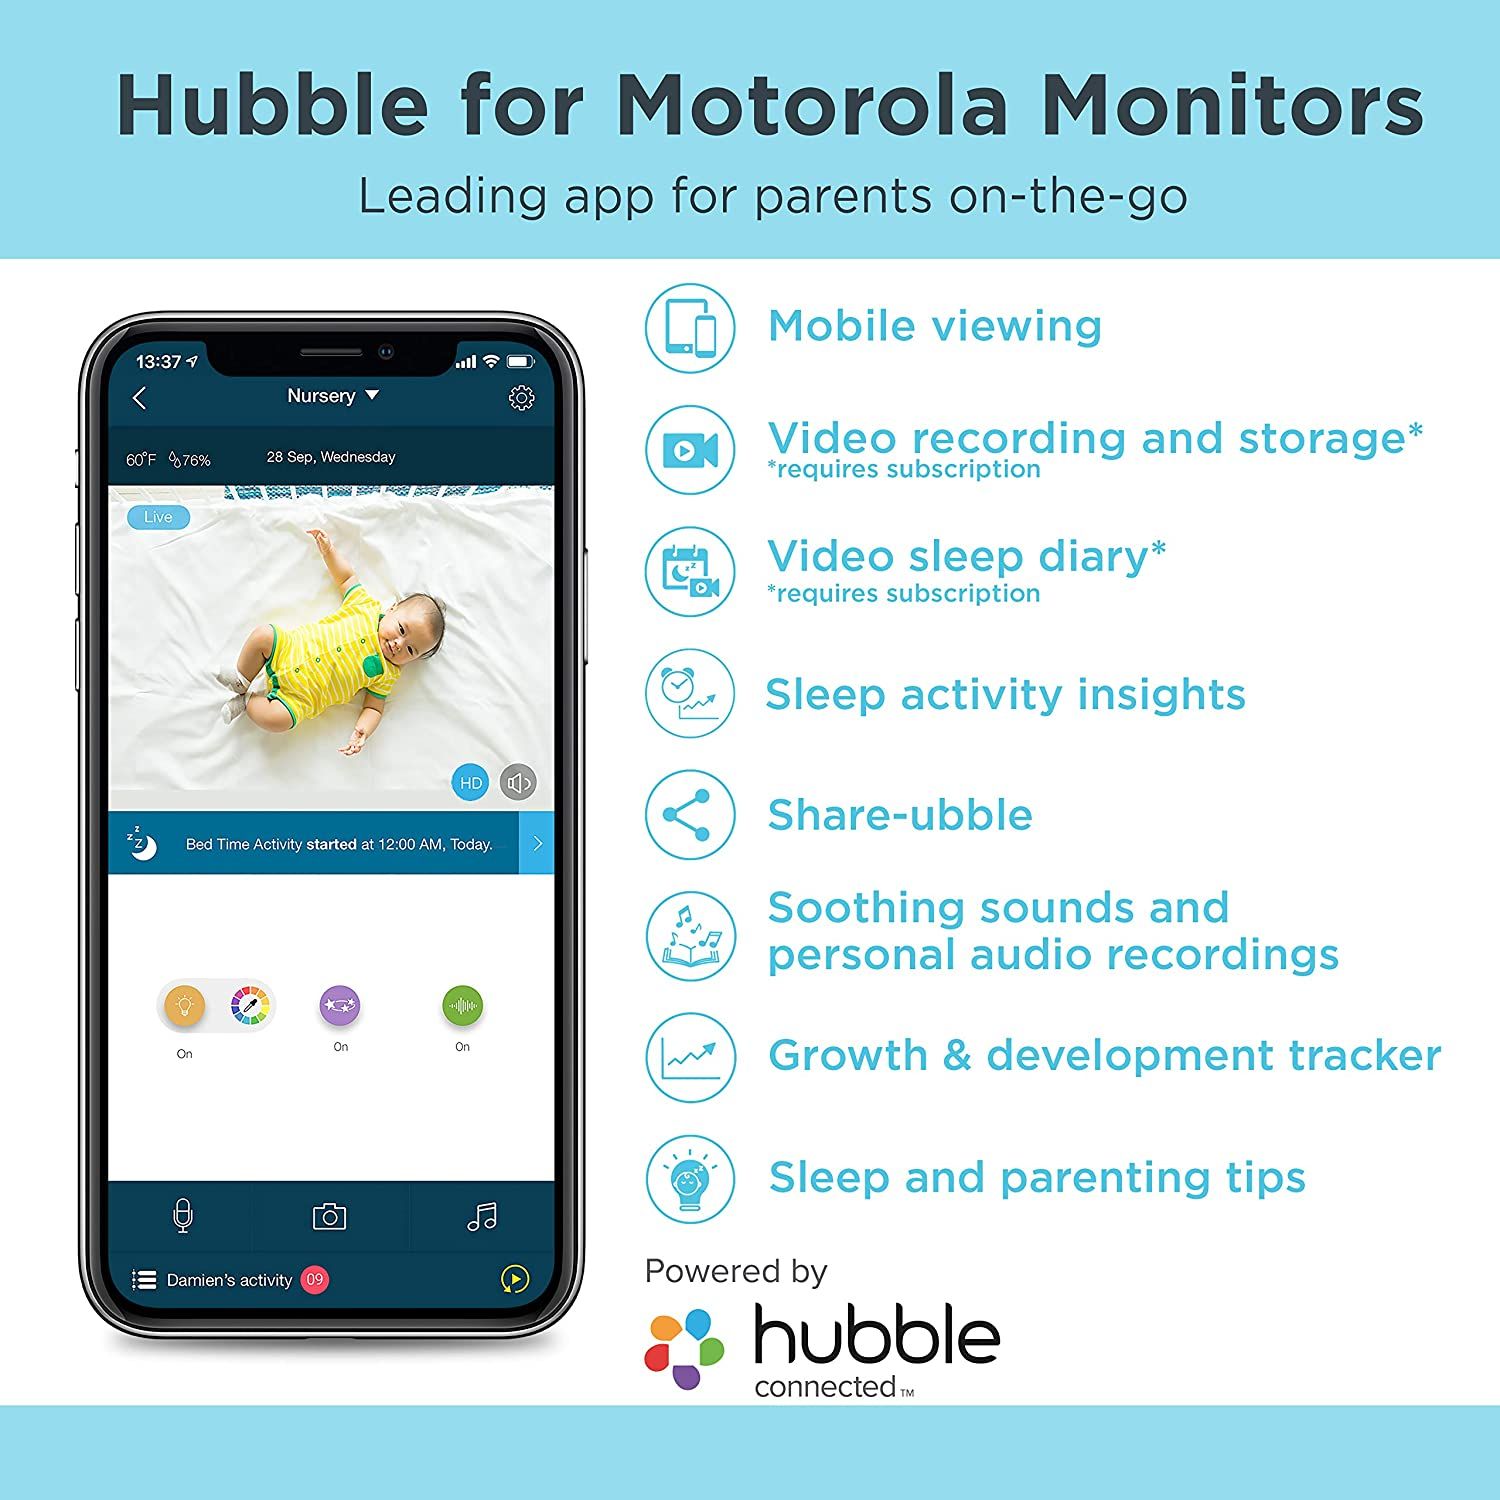 Motorola Halo+ hubble app